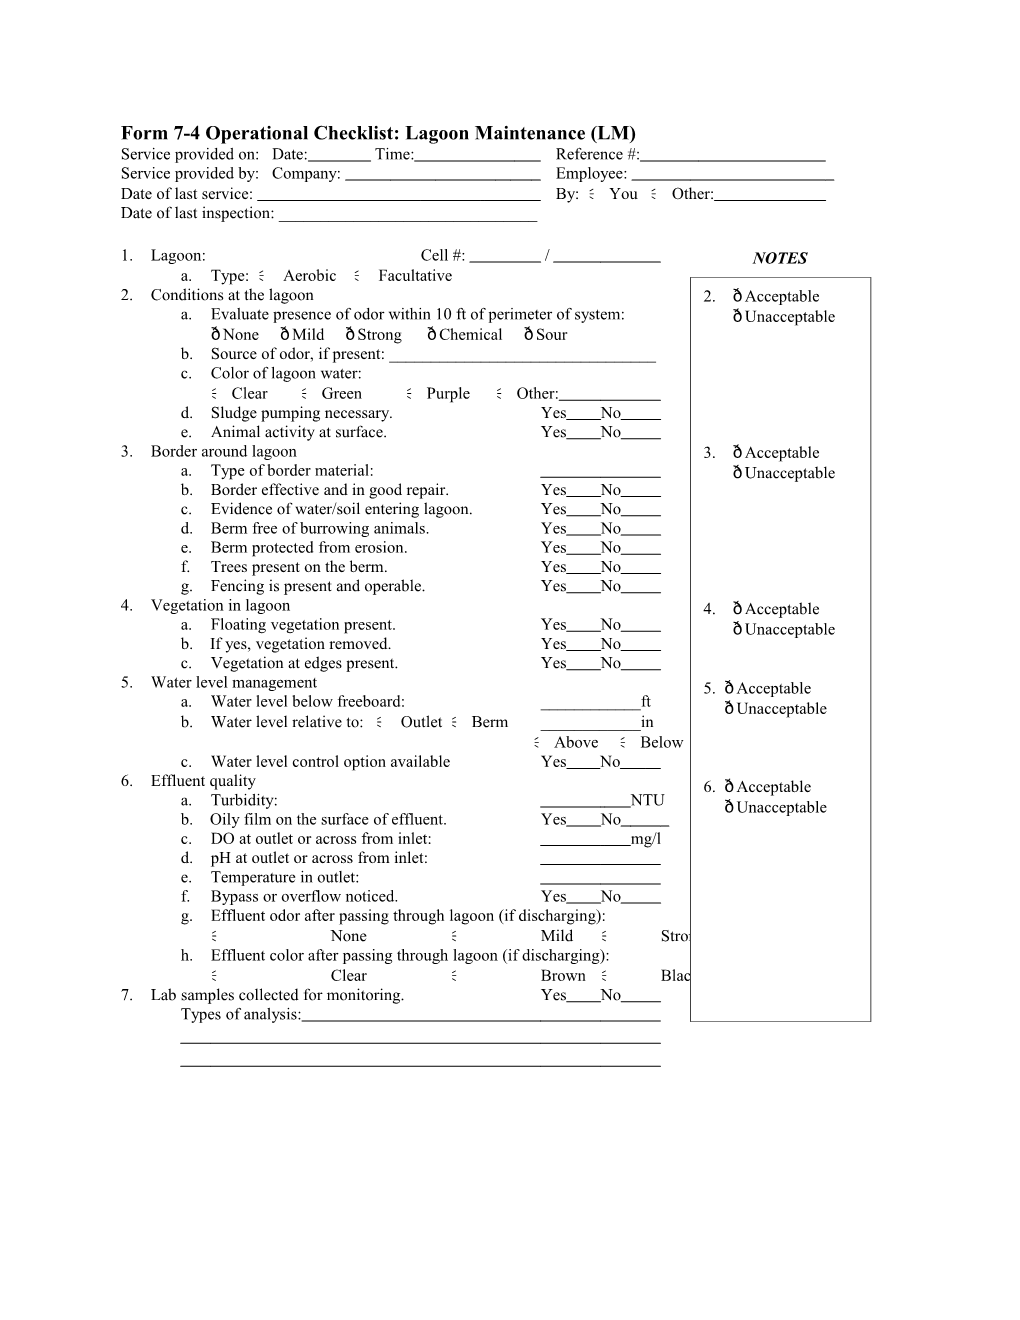 Form 7-4 Operational Checklist: Lagoon Maintenance (LM)